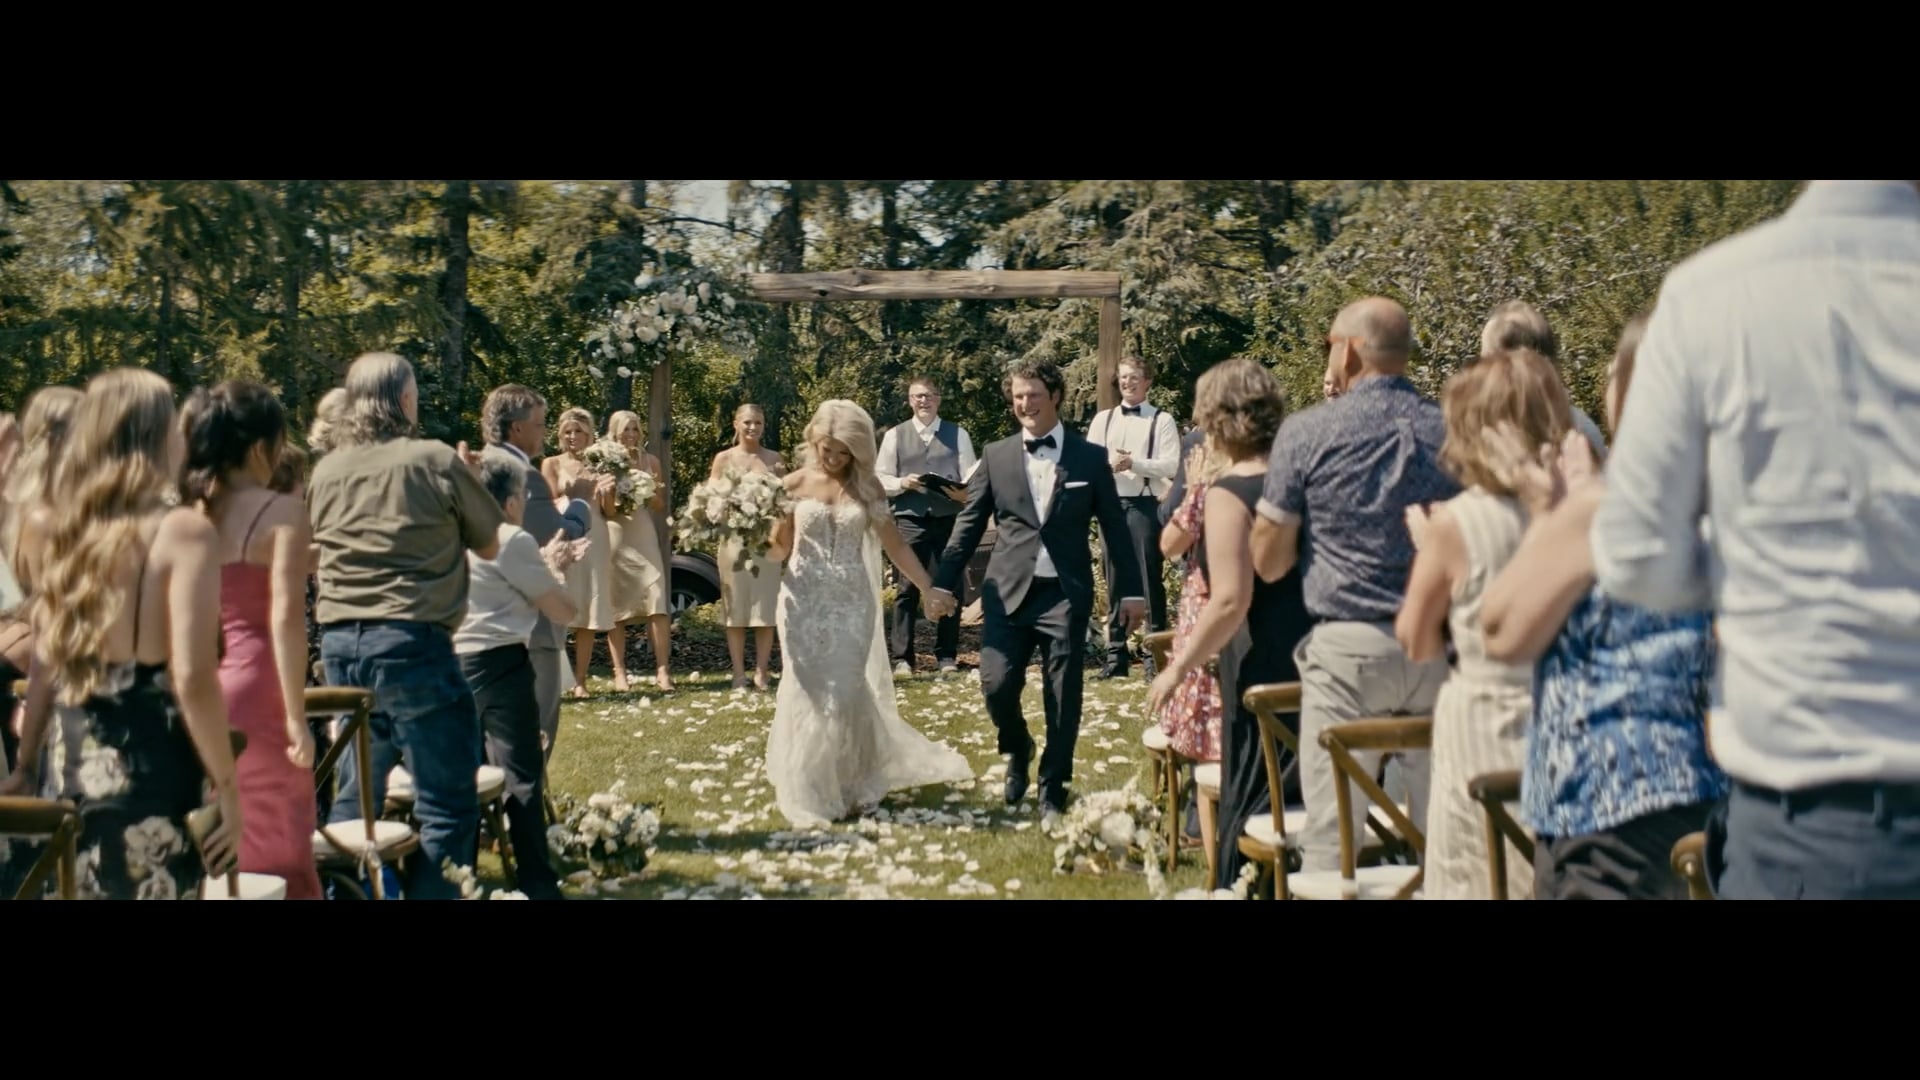 The Johnson Wedding | Highlight Film